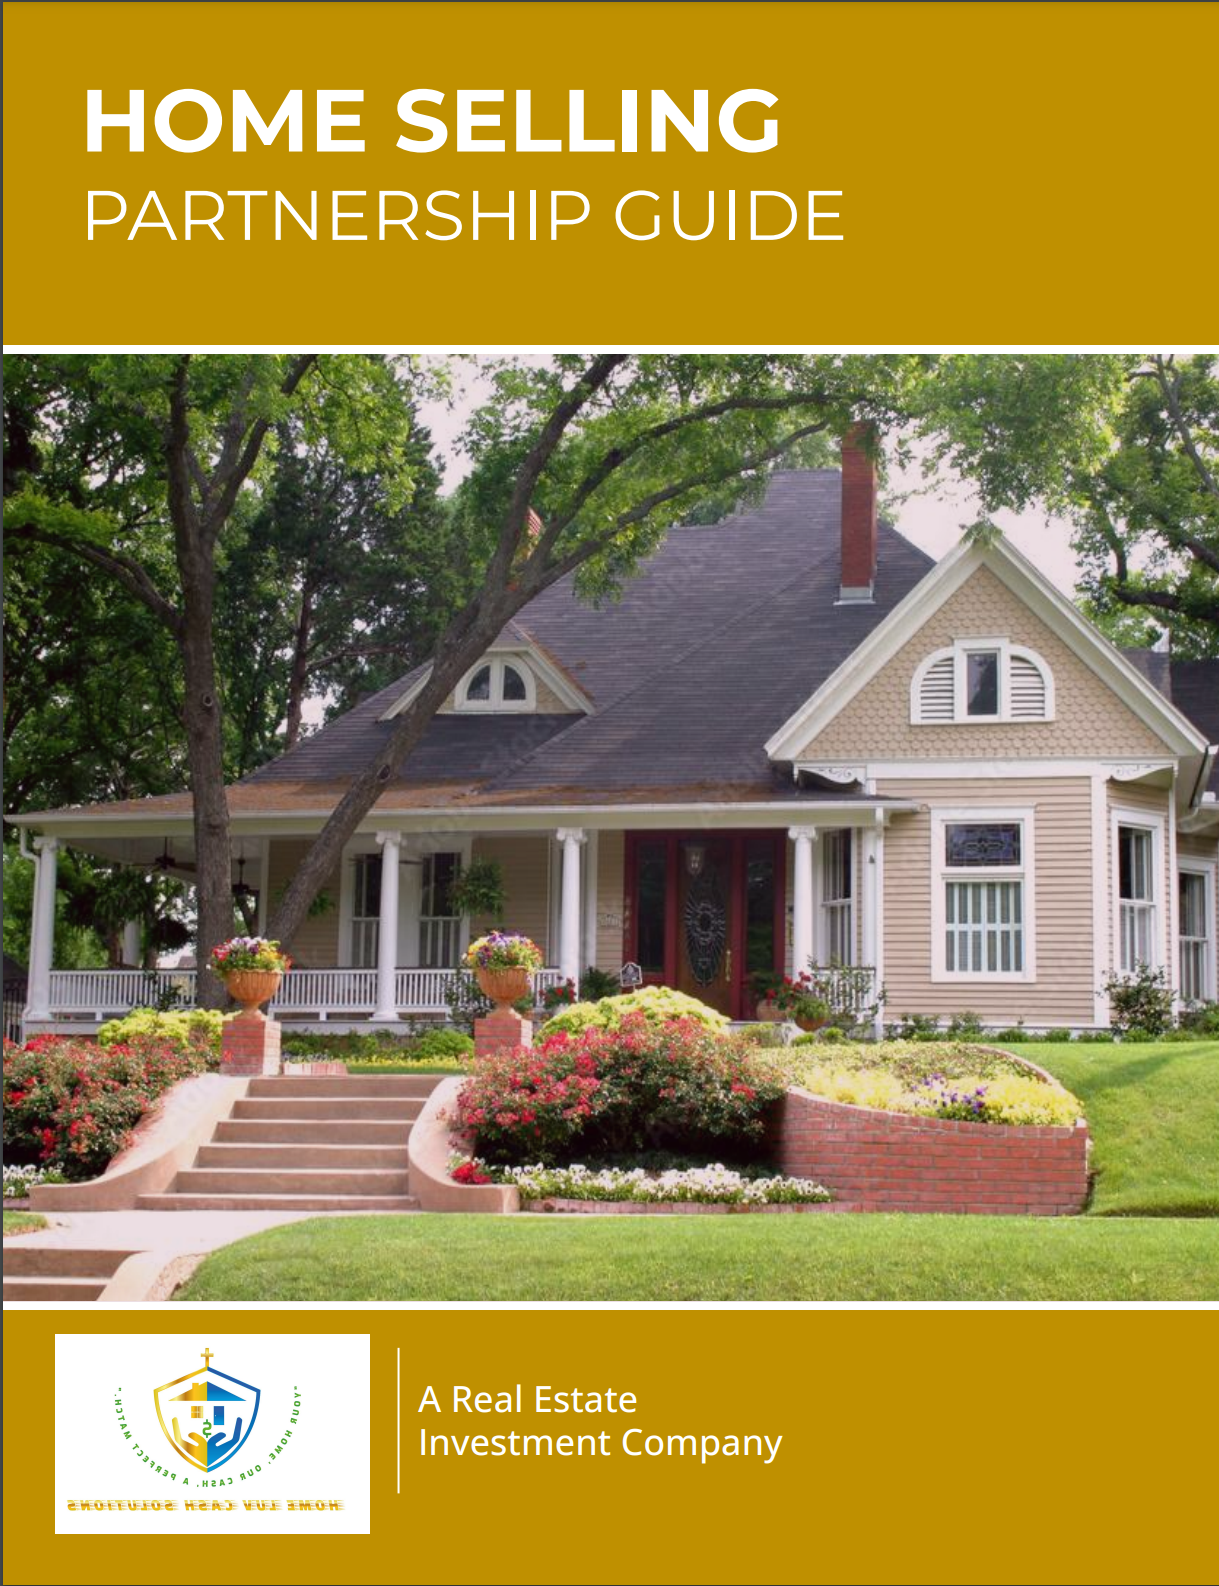 HLCS-Seller Partnership Guidep Image-1